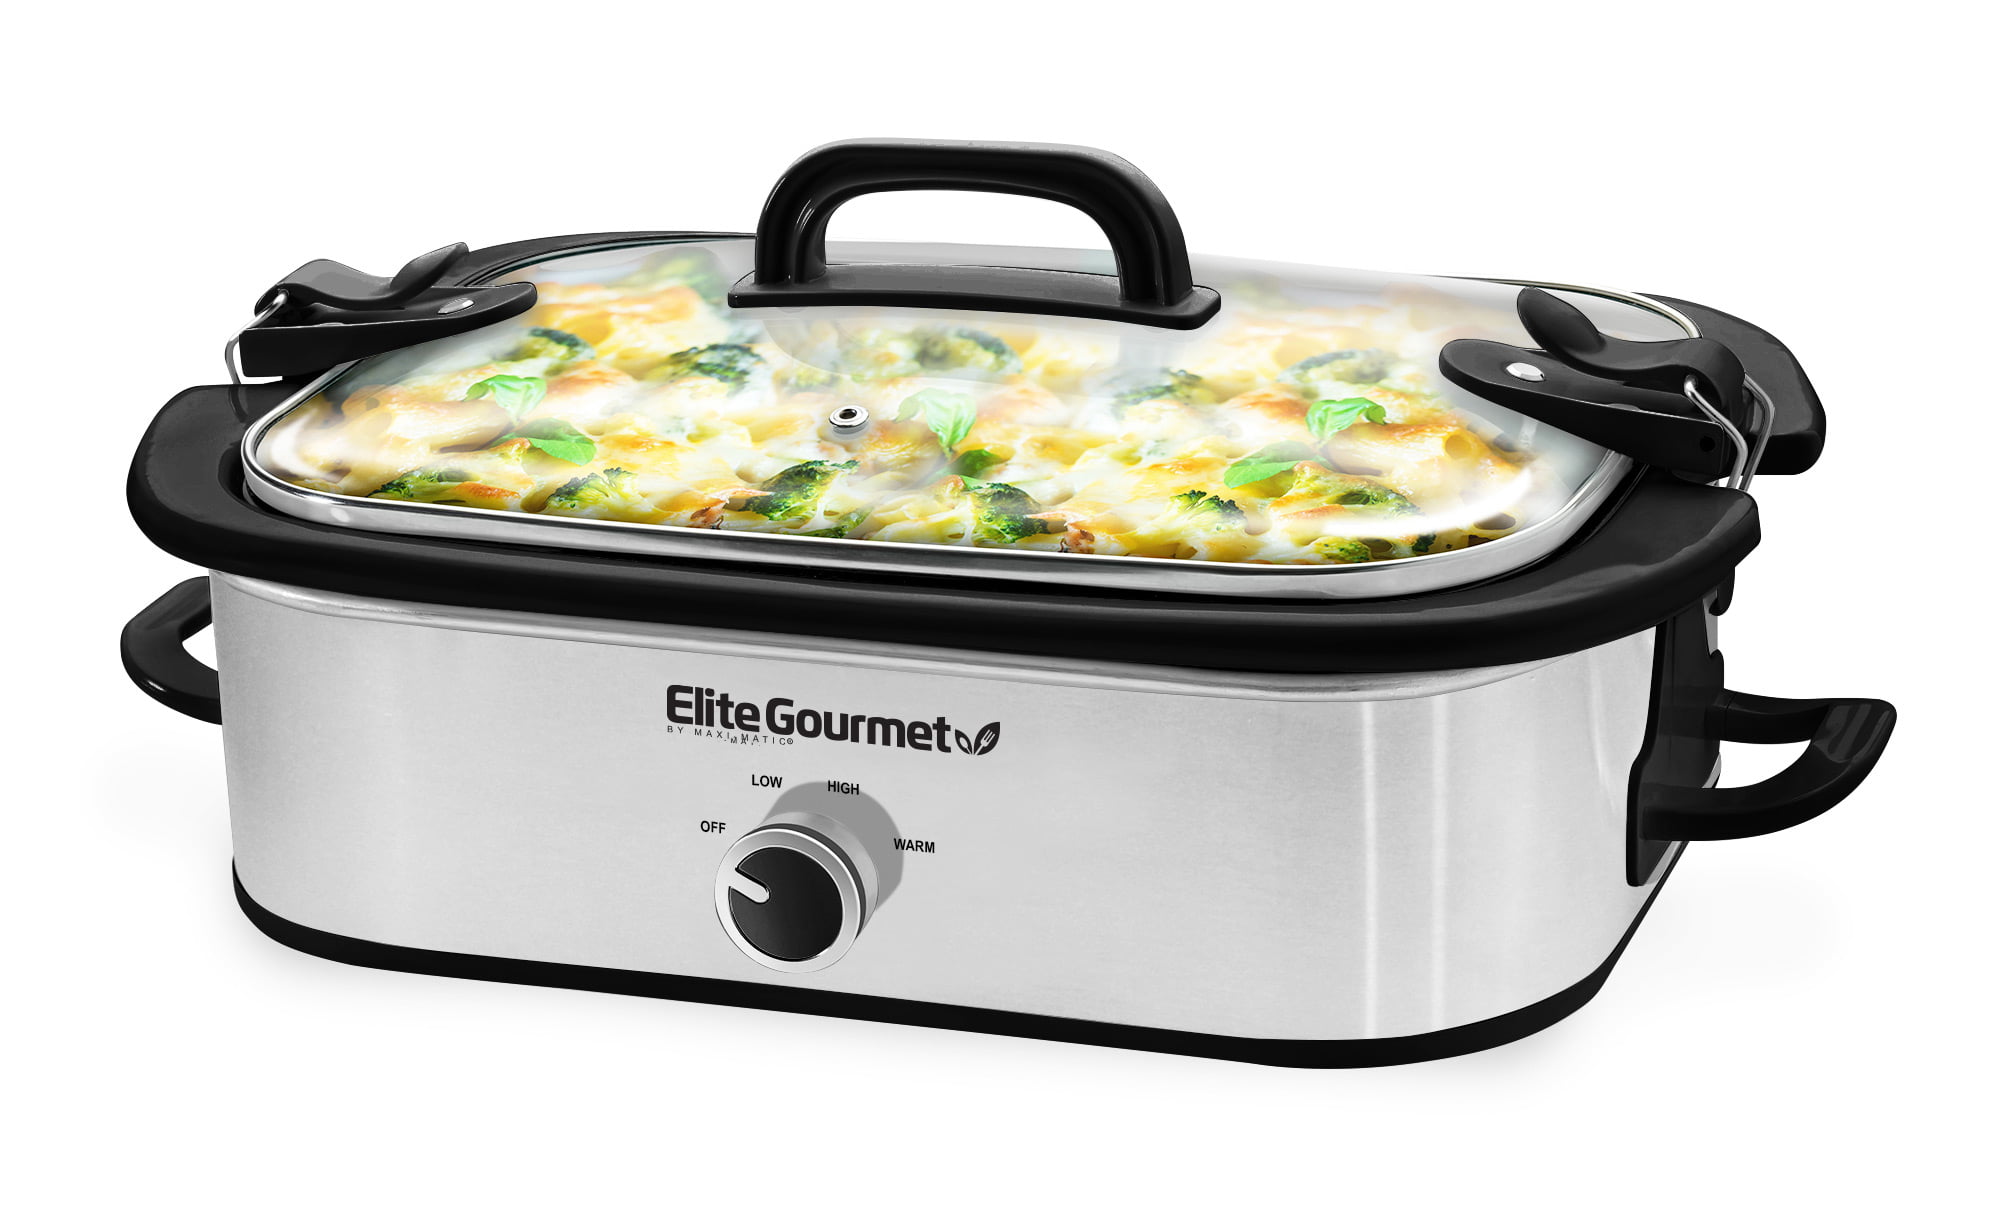 Elite Gourmet 3-Quart Slow Cooker - Black - 9455763